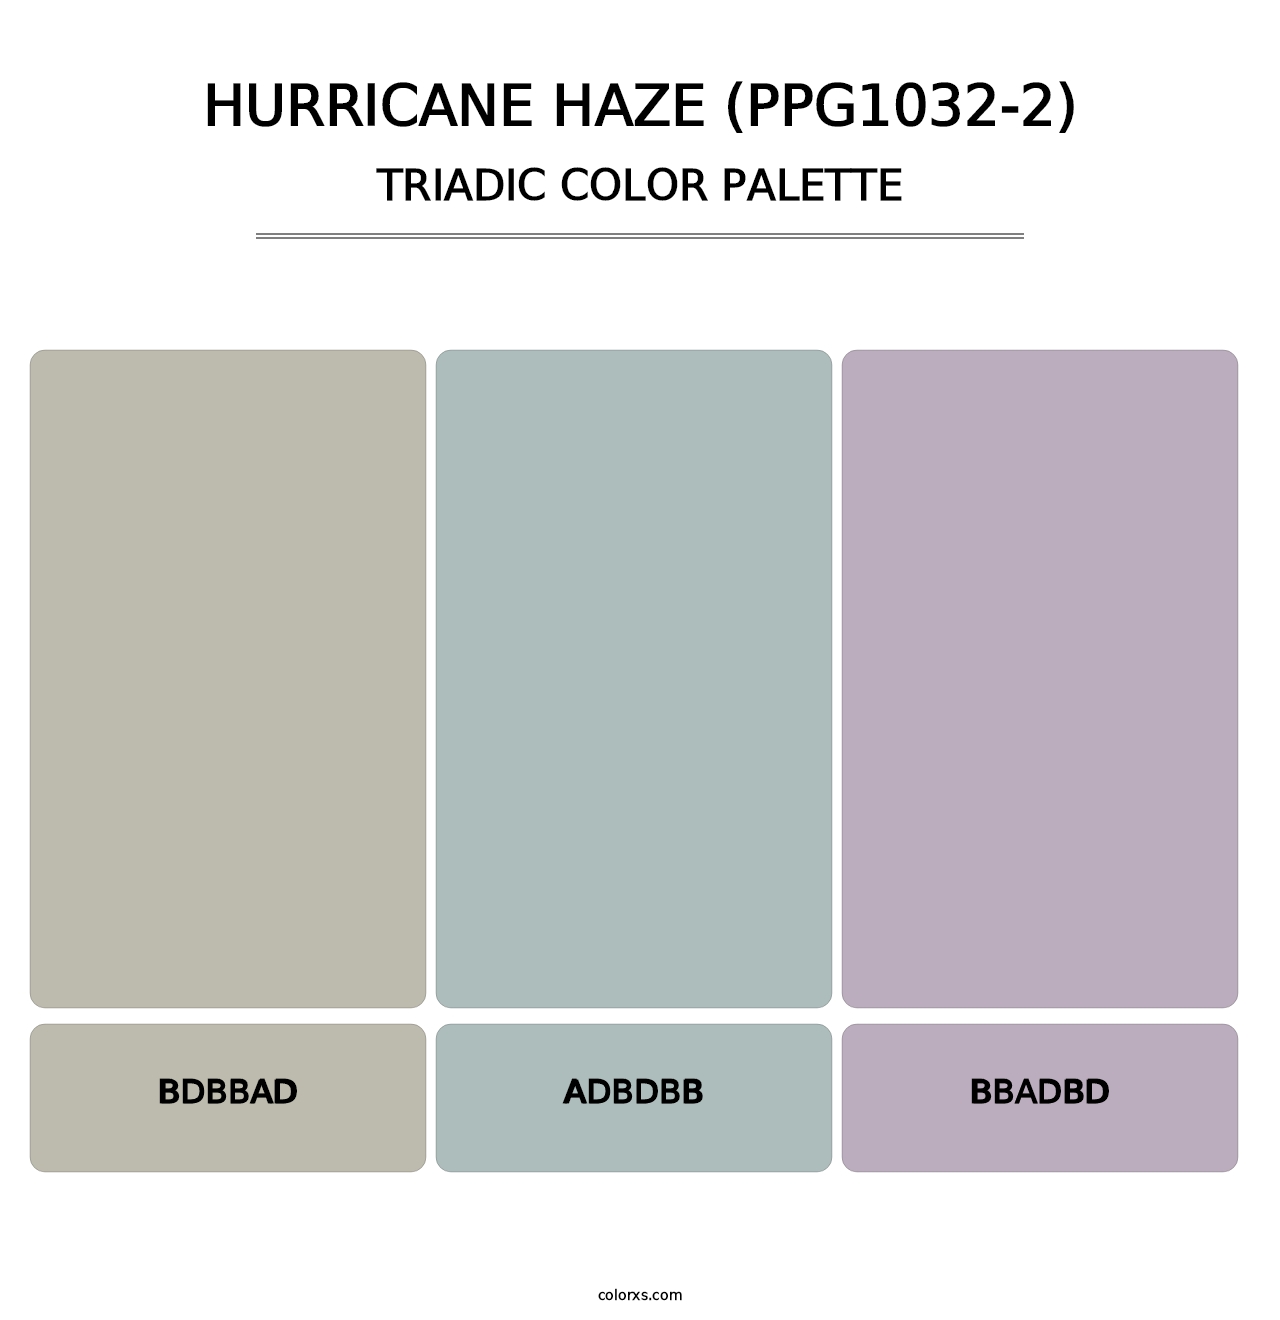 Hurricane Haze (PPG1032-2) - Triadic Color Palette